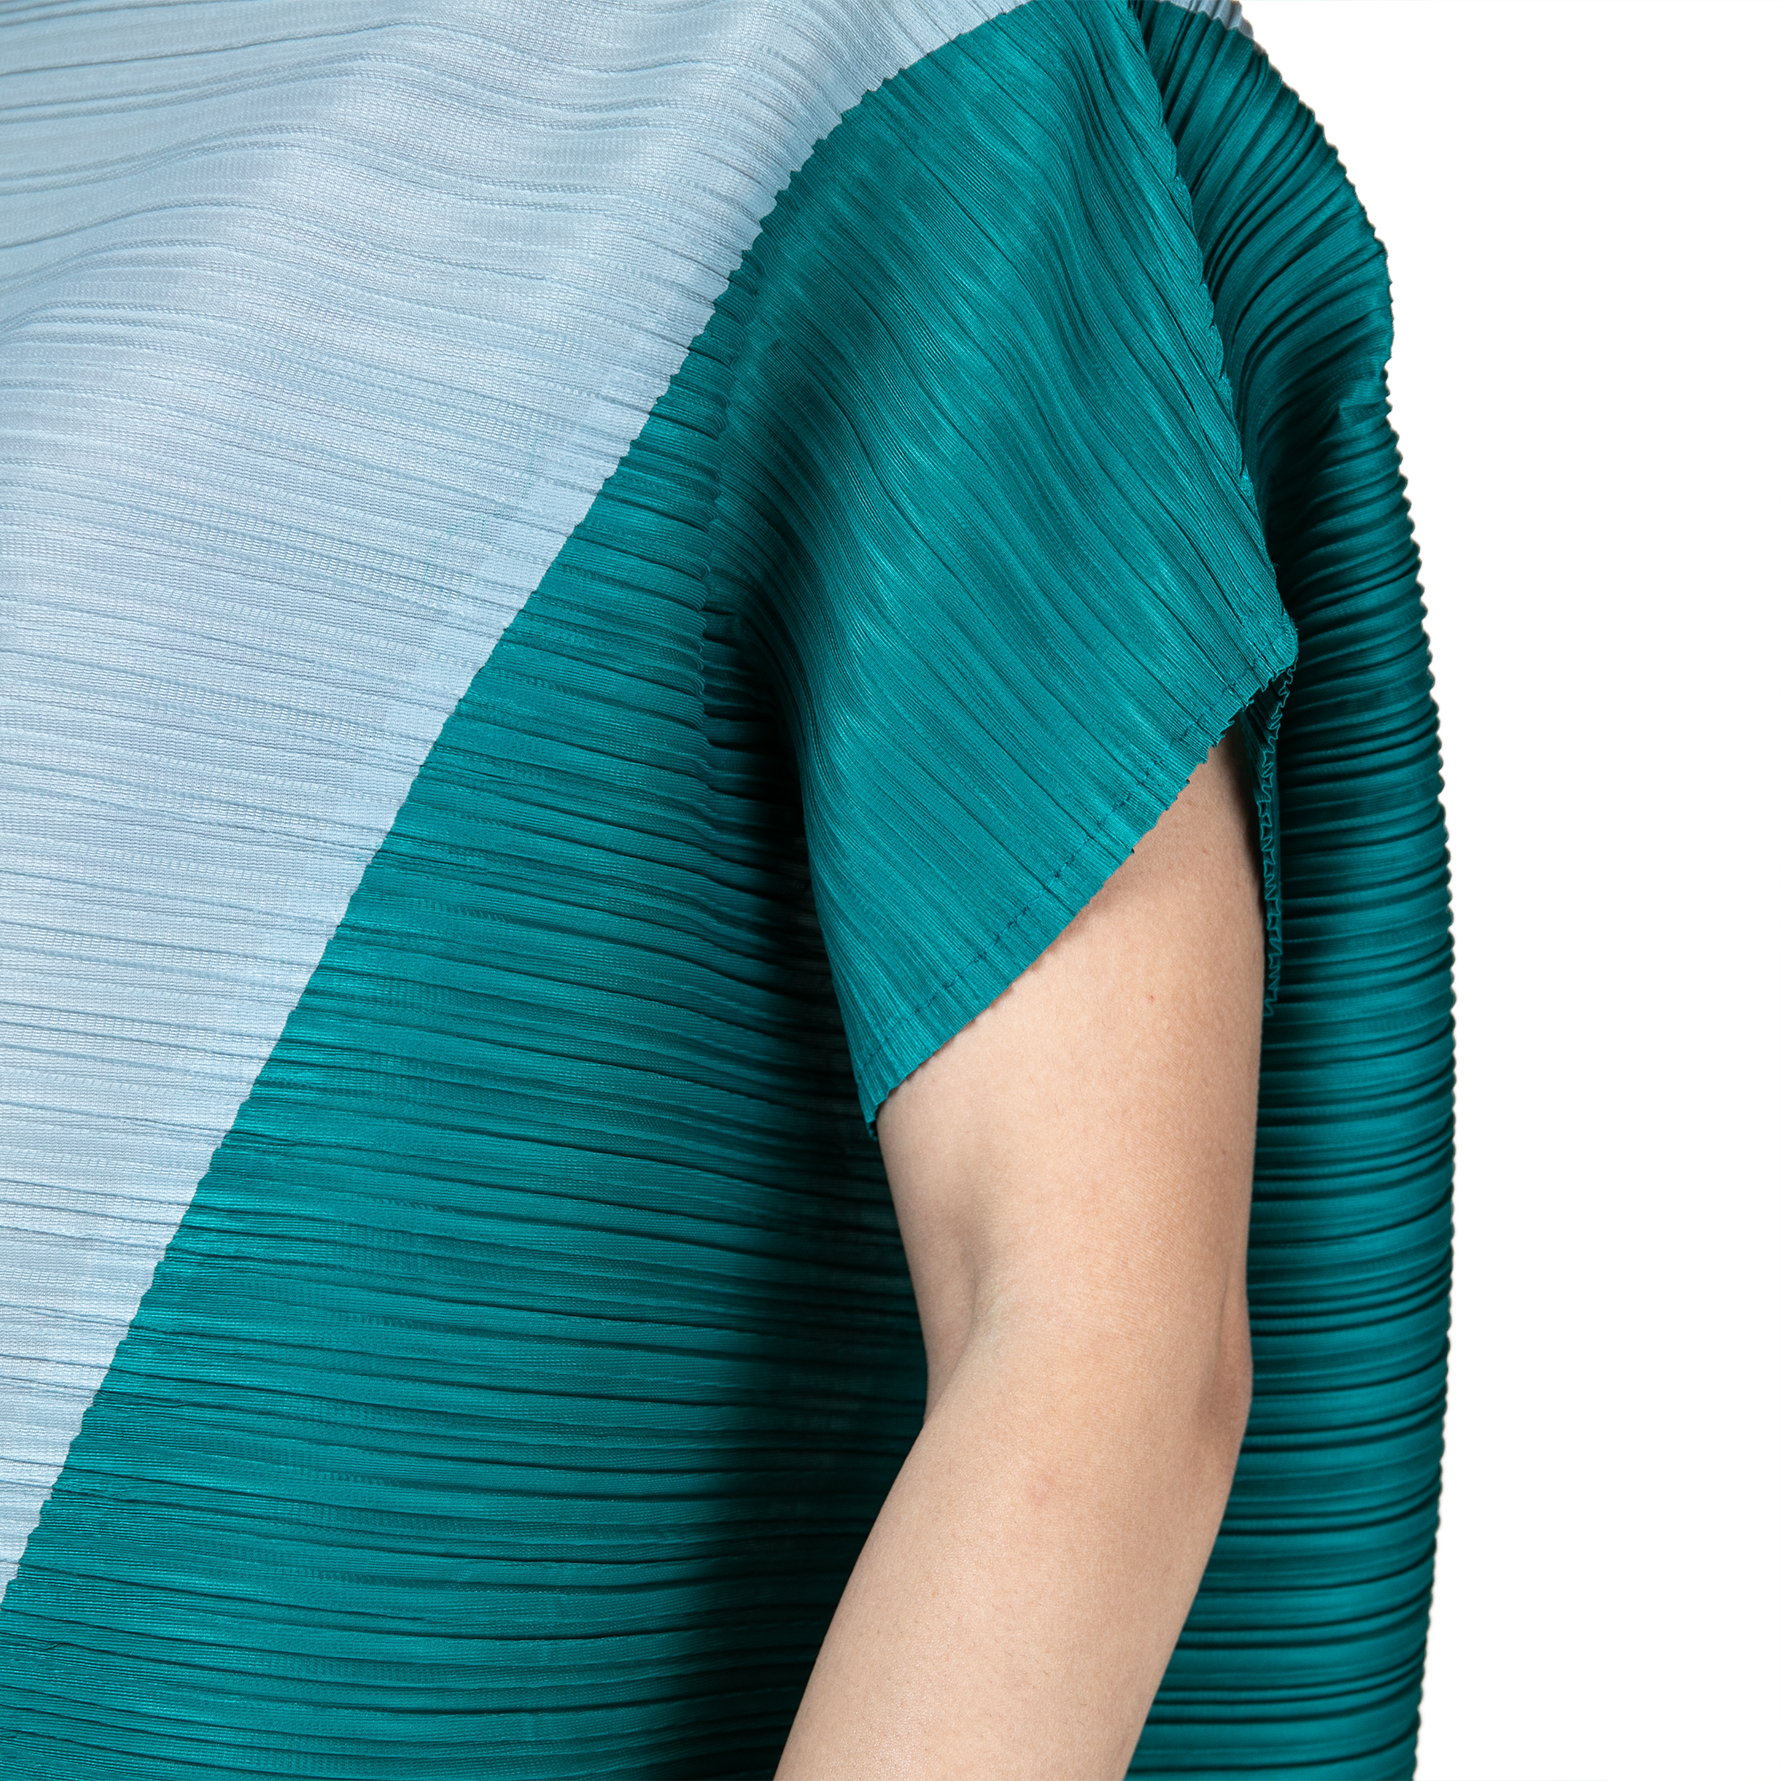 Pleated asymmetric diagonal cut dress